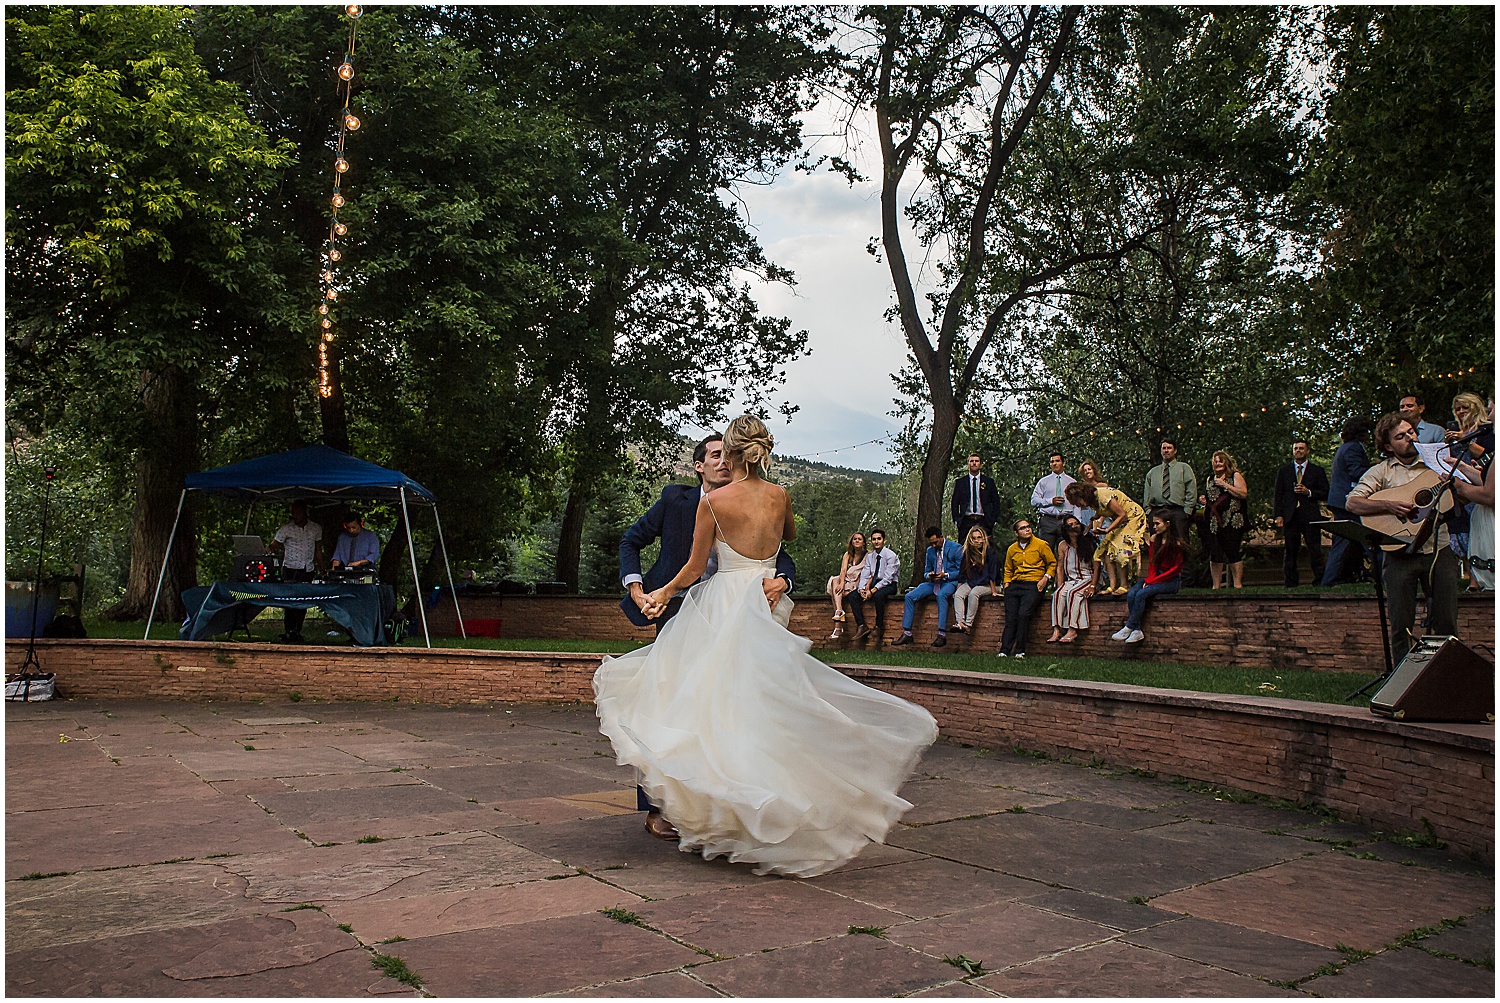 River Bend Outdoor Summer Wedding Photos, Lyons Colorado Photographer, colorado wedding photographer, wedding photographer, outdoor wedding style, lyons farmette